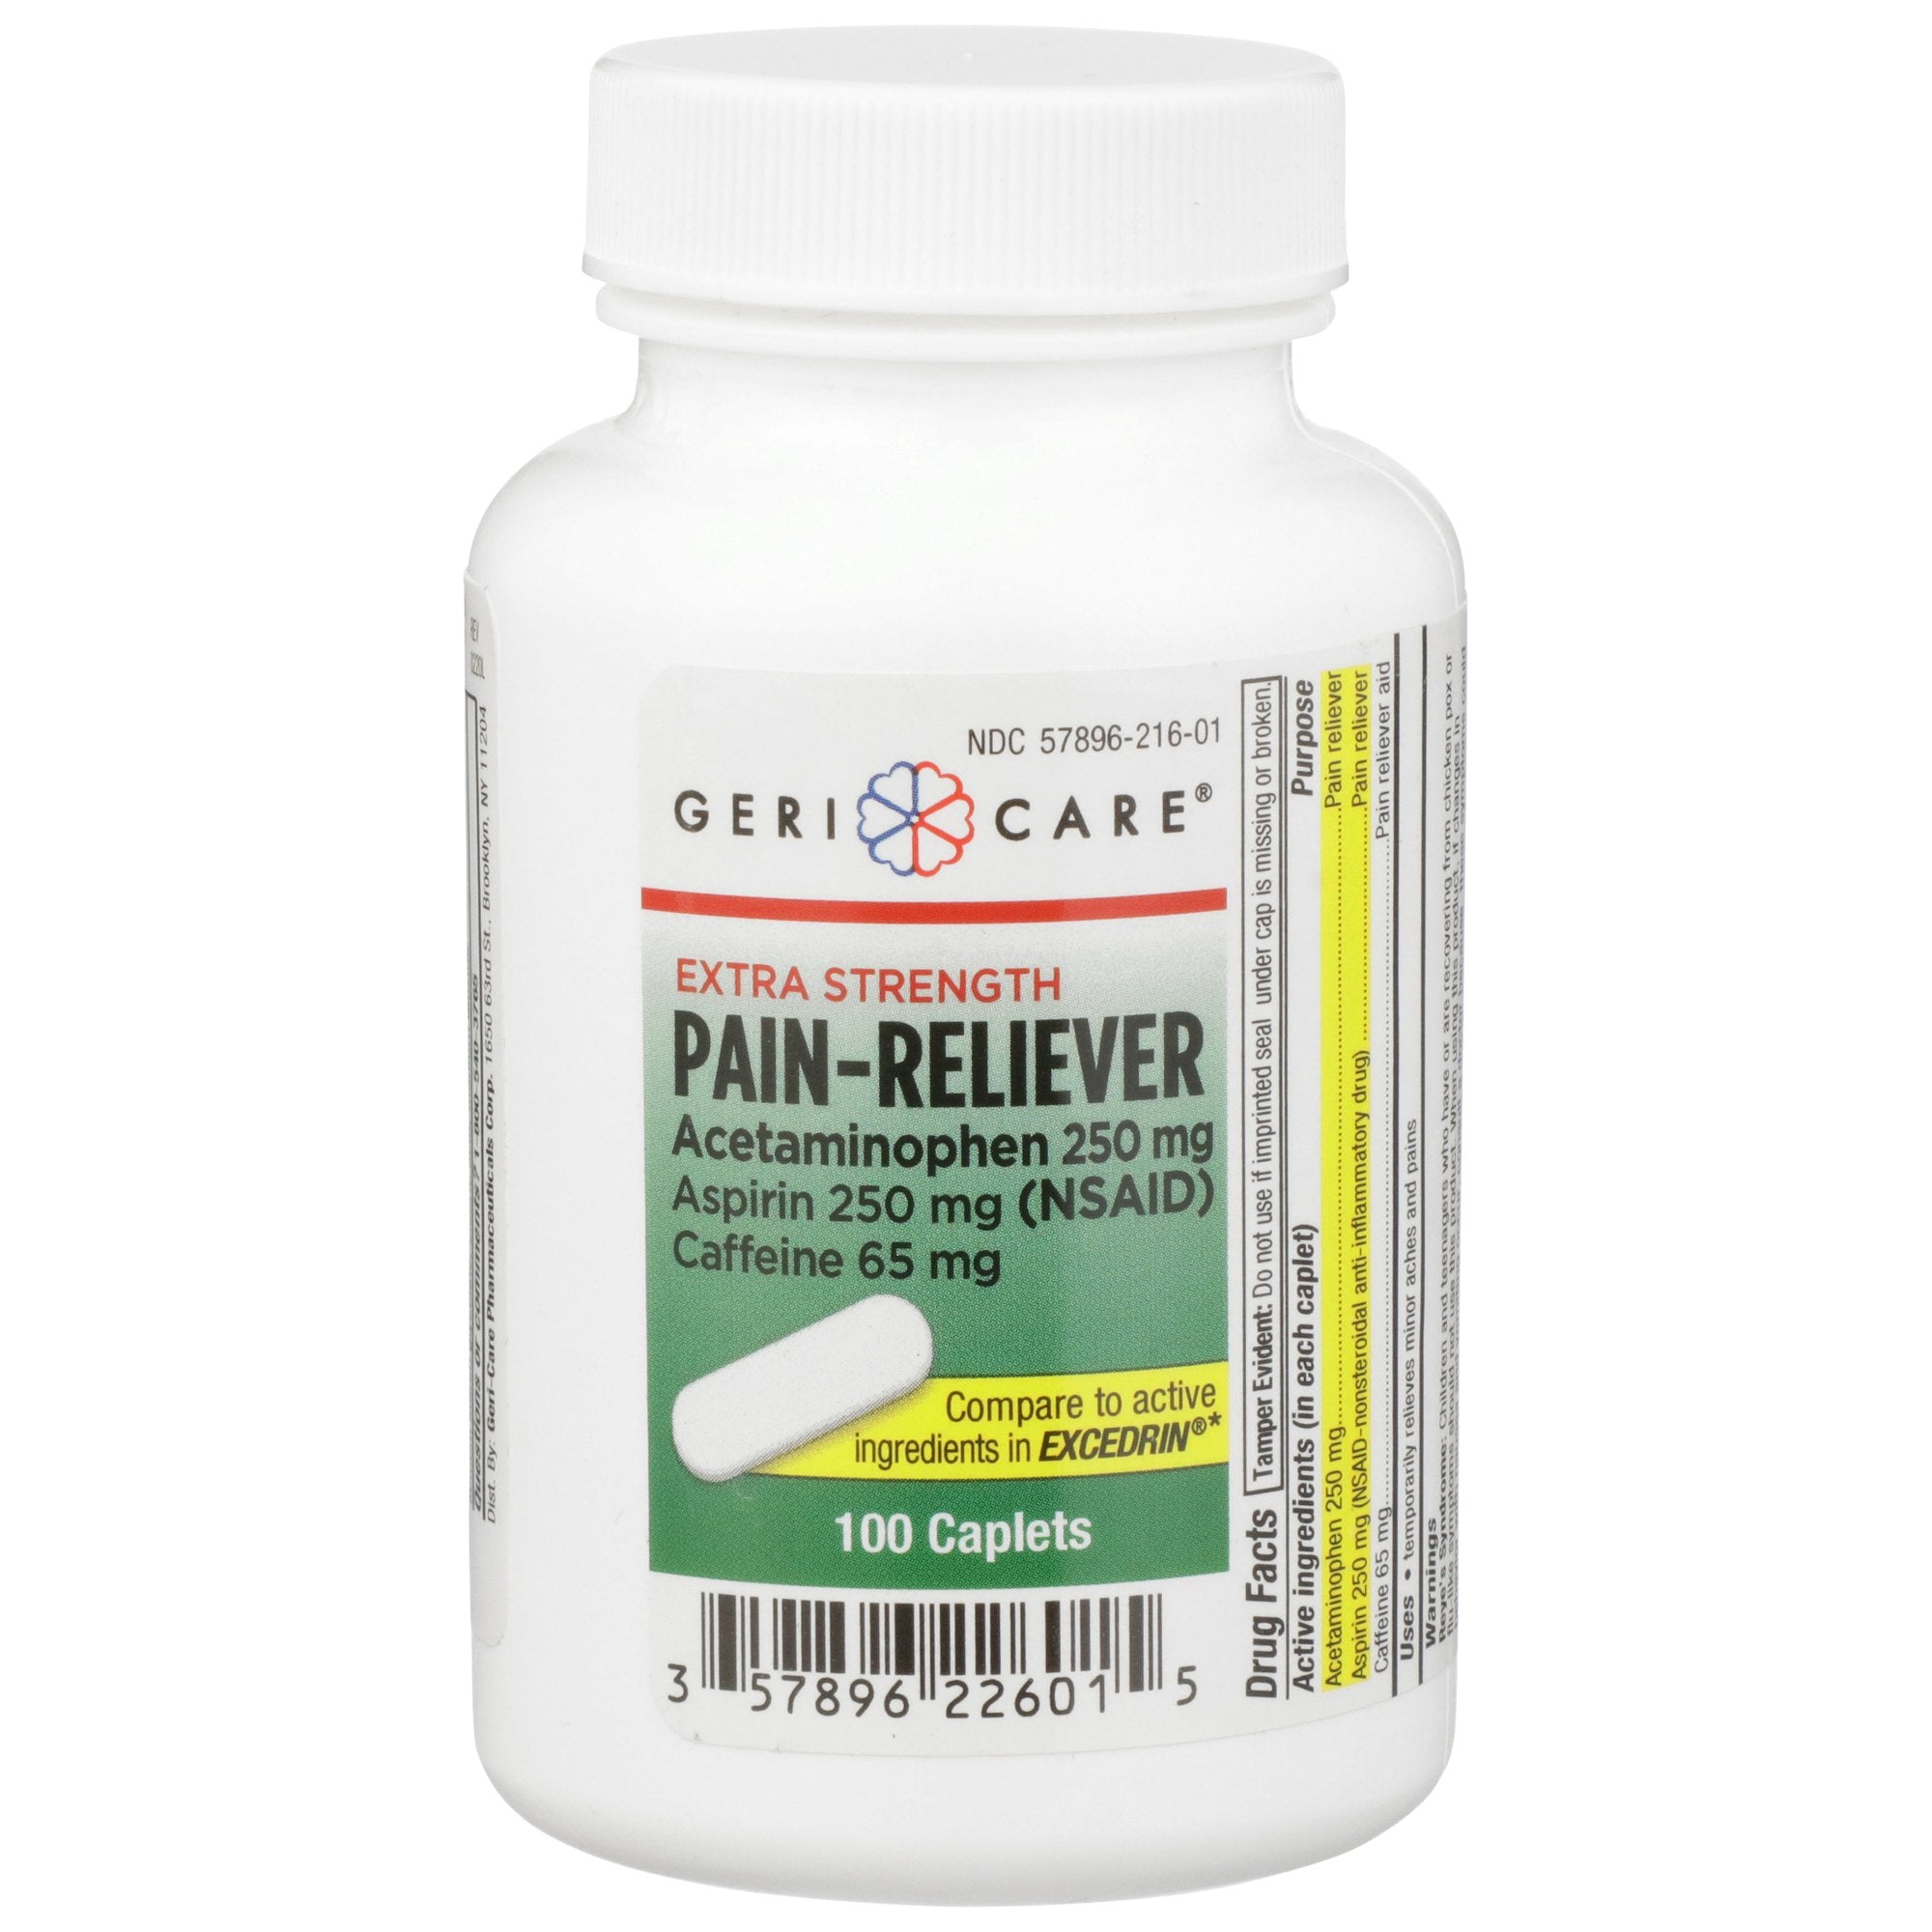 Geri-Care® Acetaminophen / Aspirin / Caffeine Pain Relief